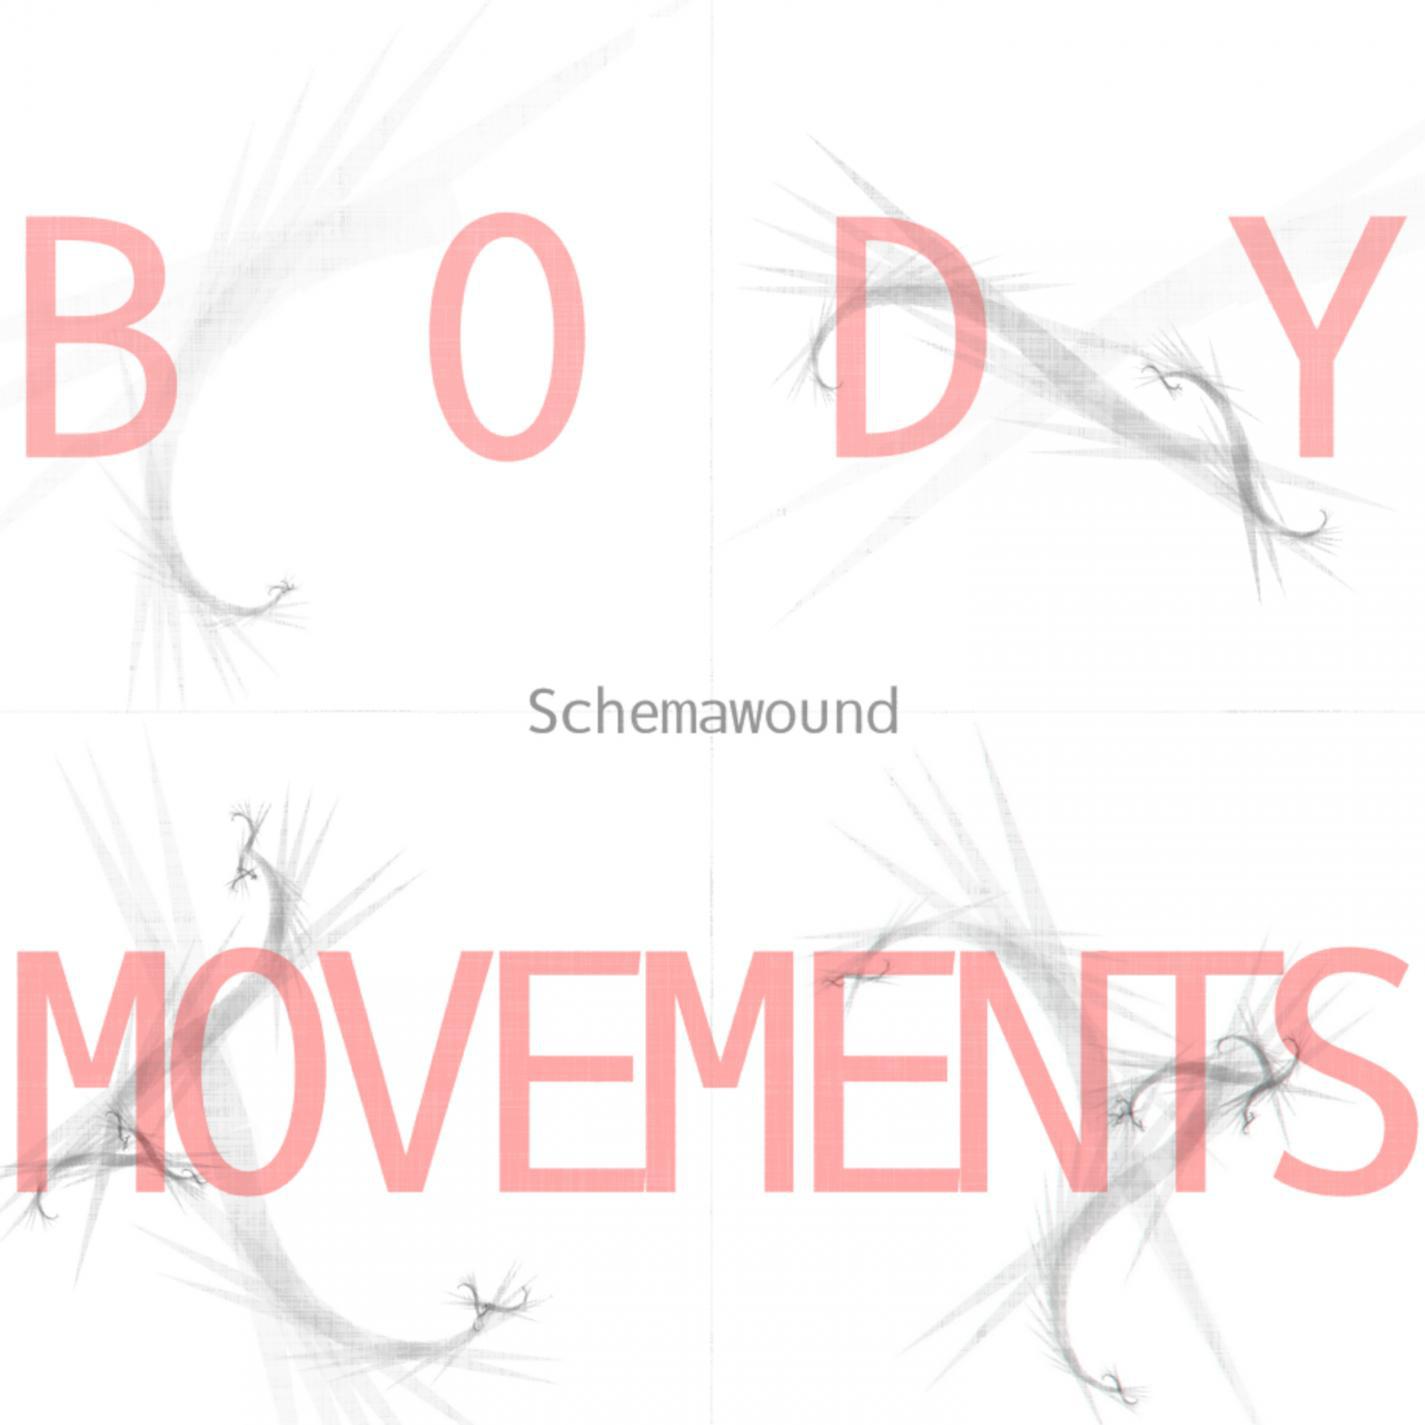 Schemawound - Bluster Barrow Combod (Lackthrow Remix)